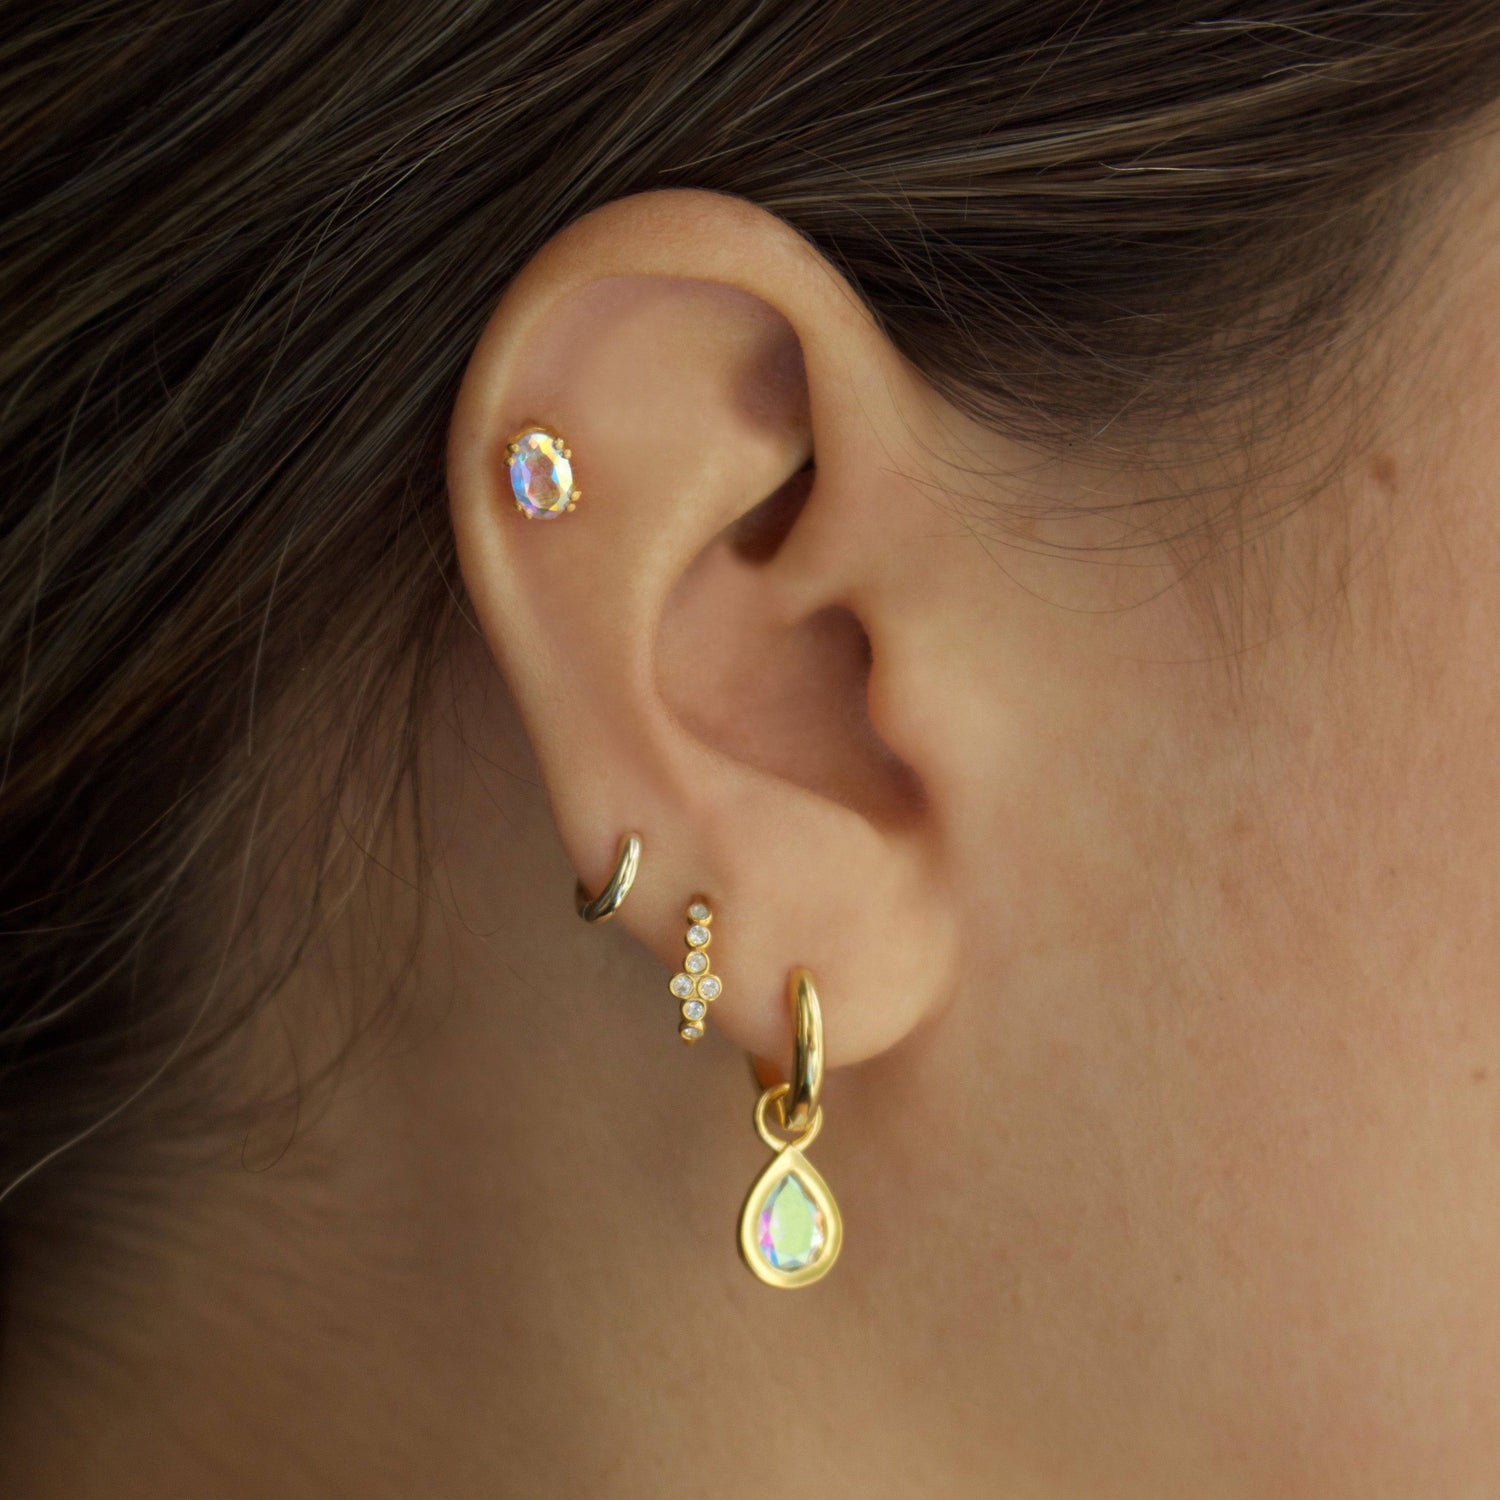 9k Solid Gold Mini Huggie Hoop Earring - SINGLE Earrings Pink City 